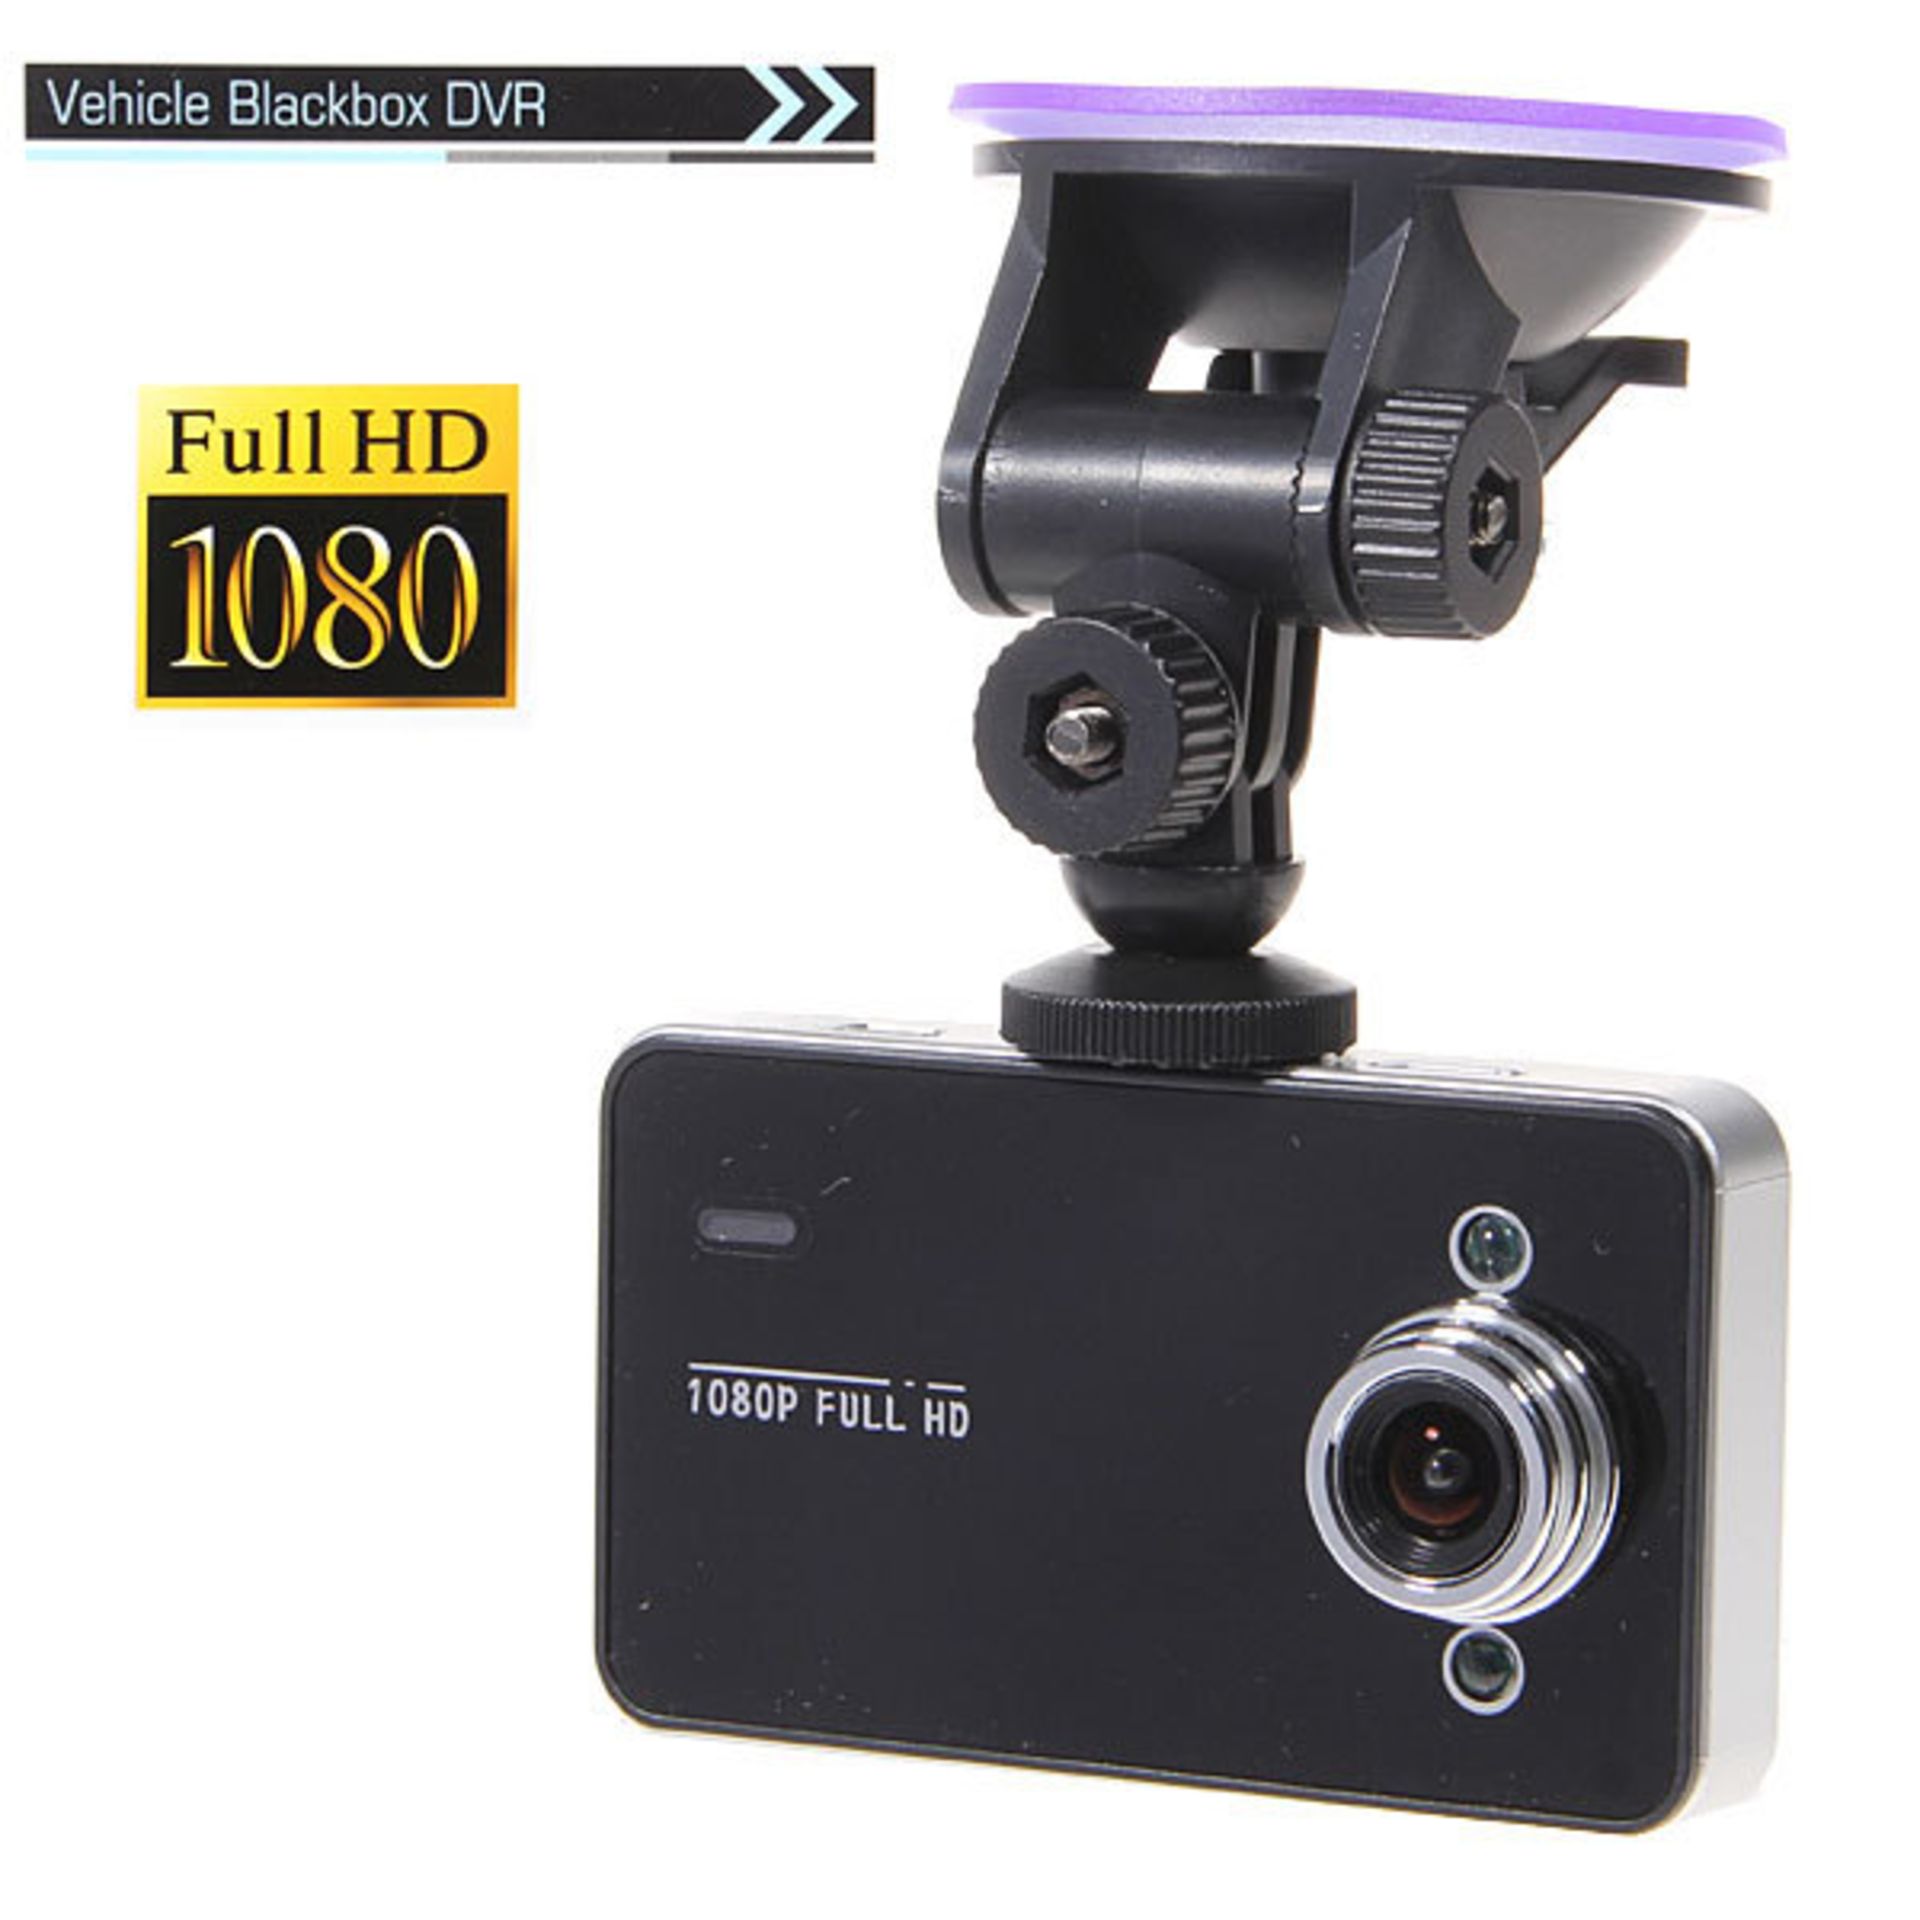 V *TRADE QTY* Brand New Car Camera Blackbox DVR With Motion Detecting HD/DVR 1080p X 3 YOUR BID